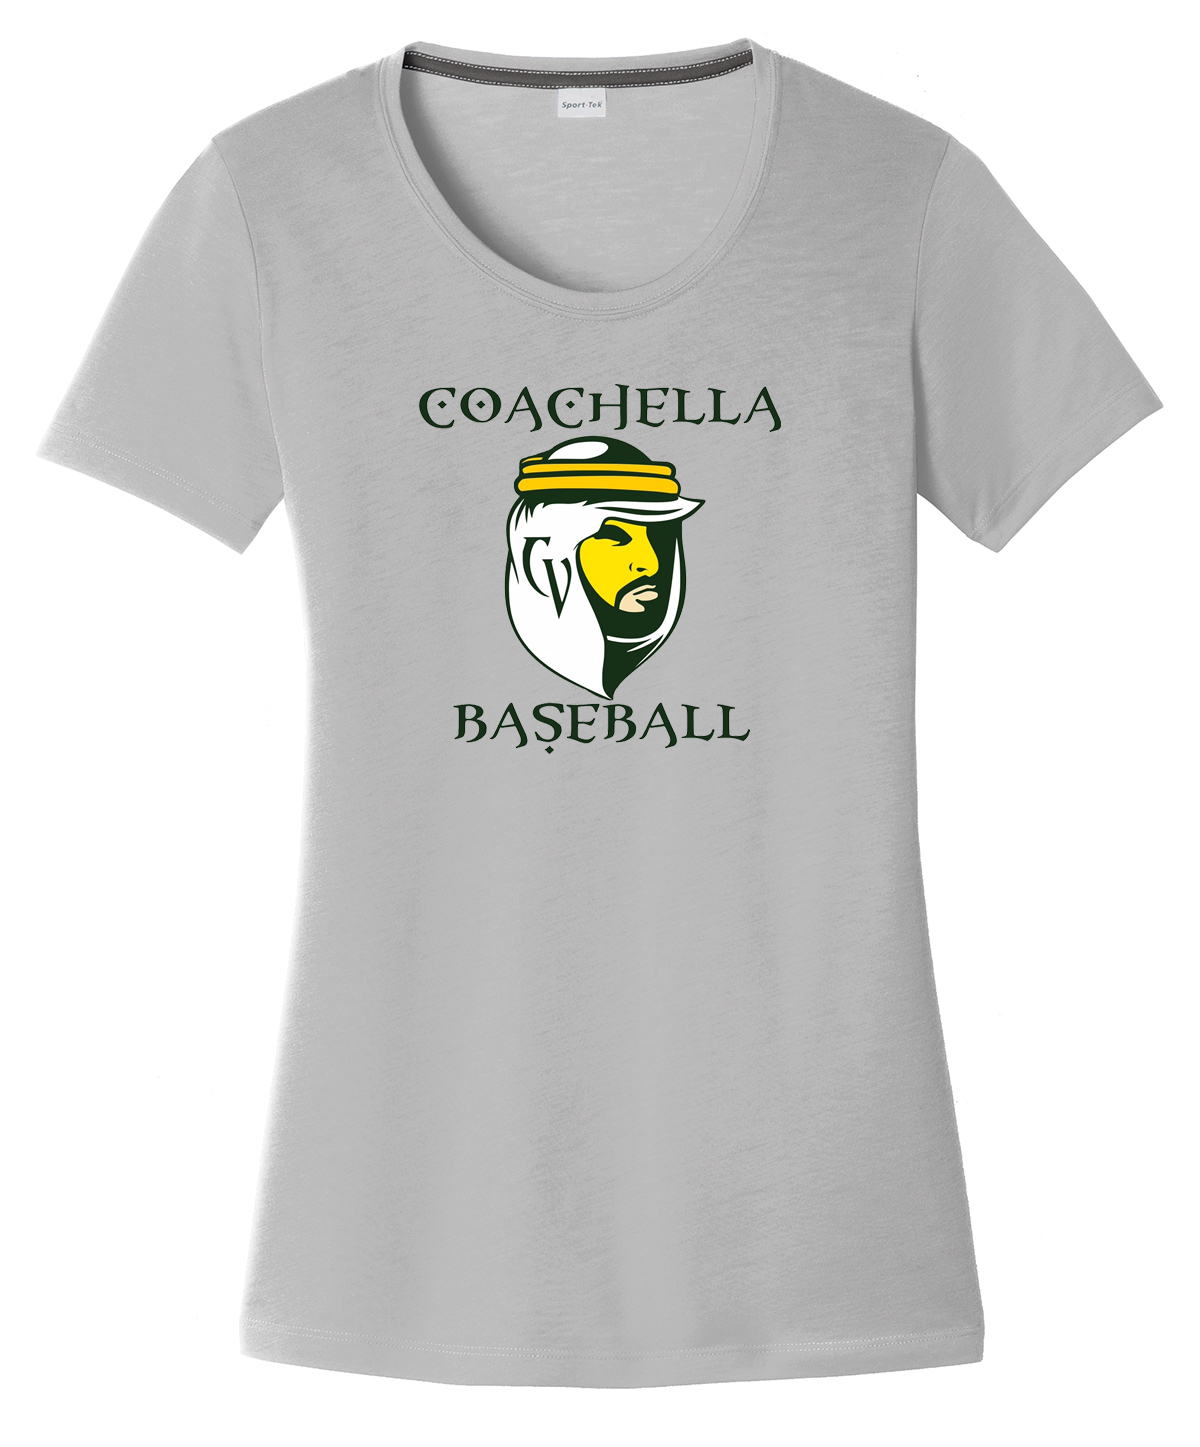 Coachella Valley Baseball Women's CottonTouch Performance T-Shirt